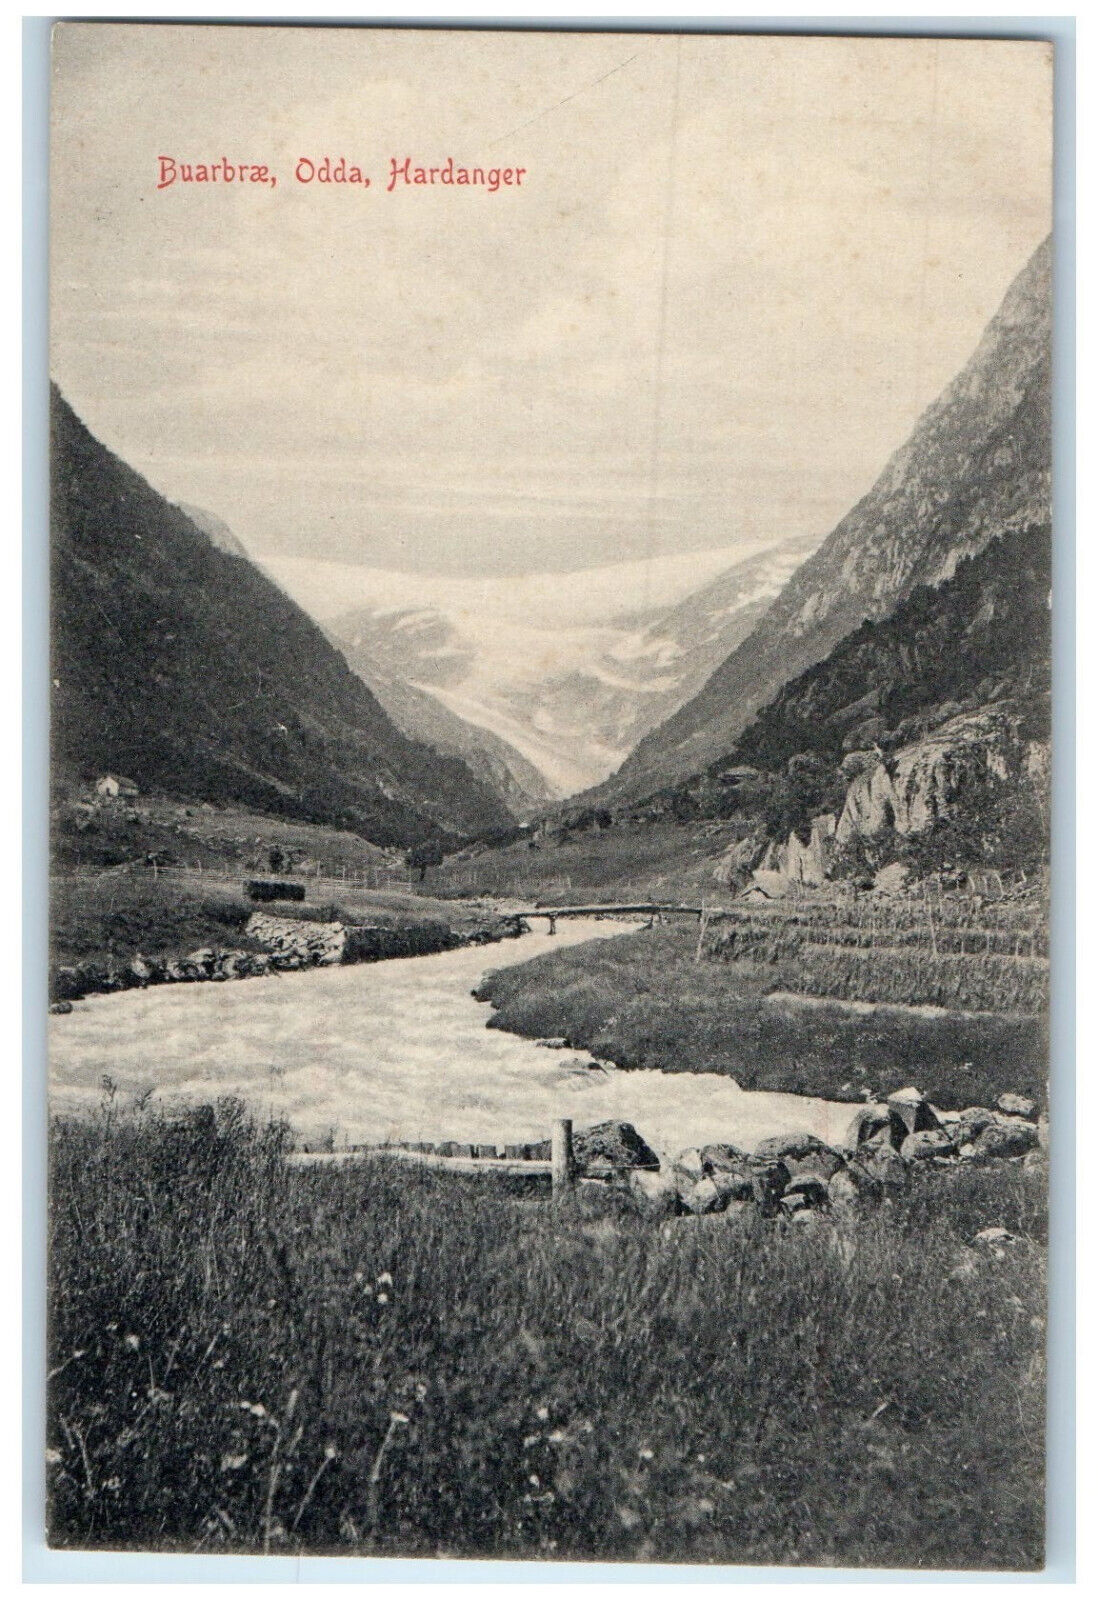 c1910 Small River in Buarbrae Odda Hardanger Western Norway Postcard